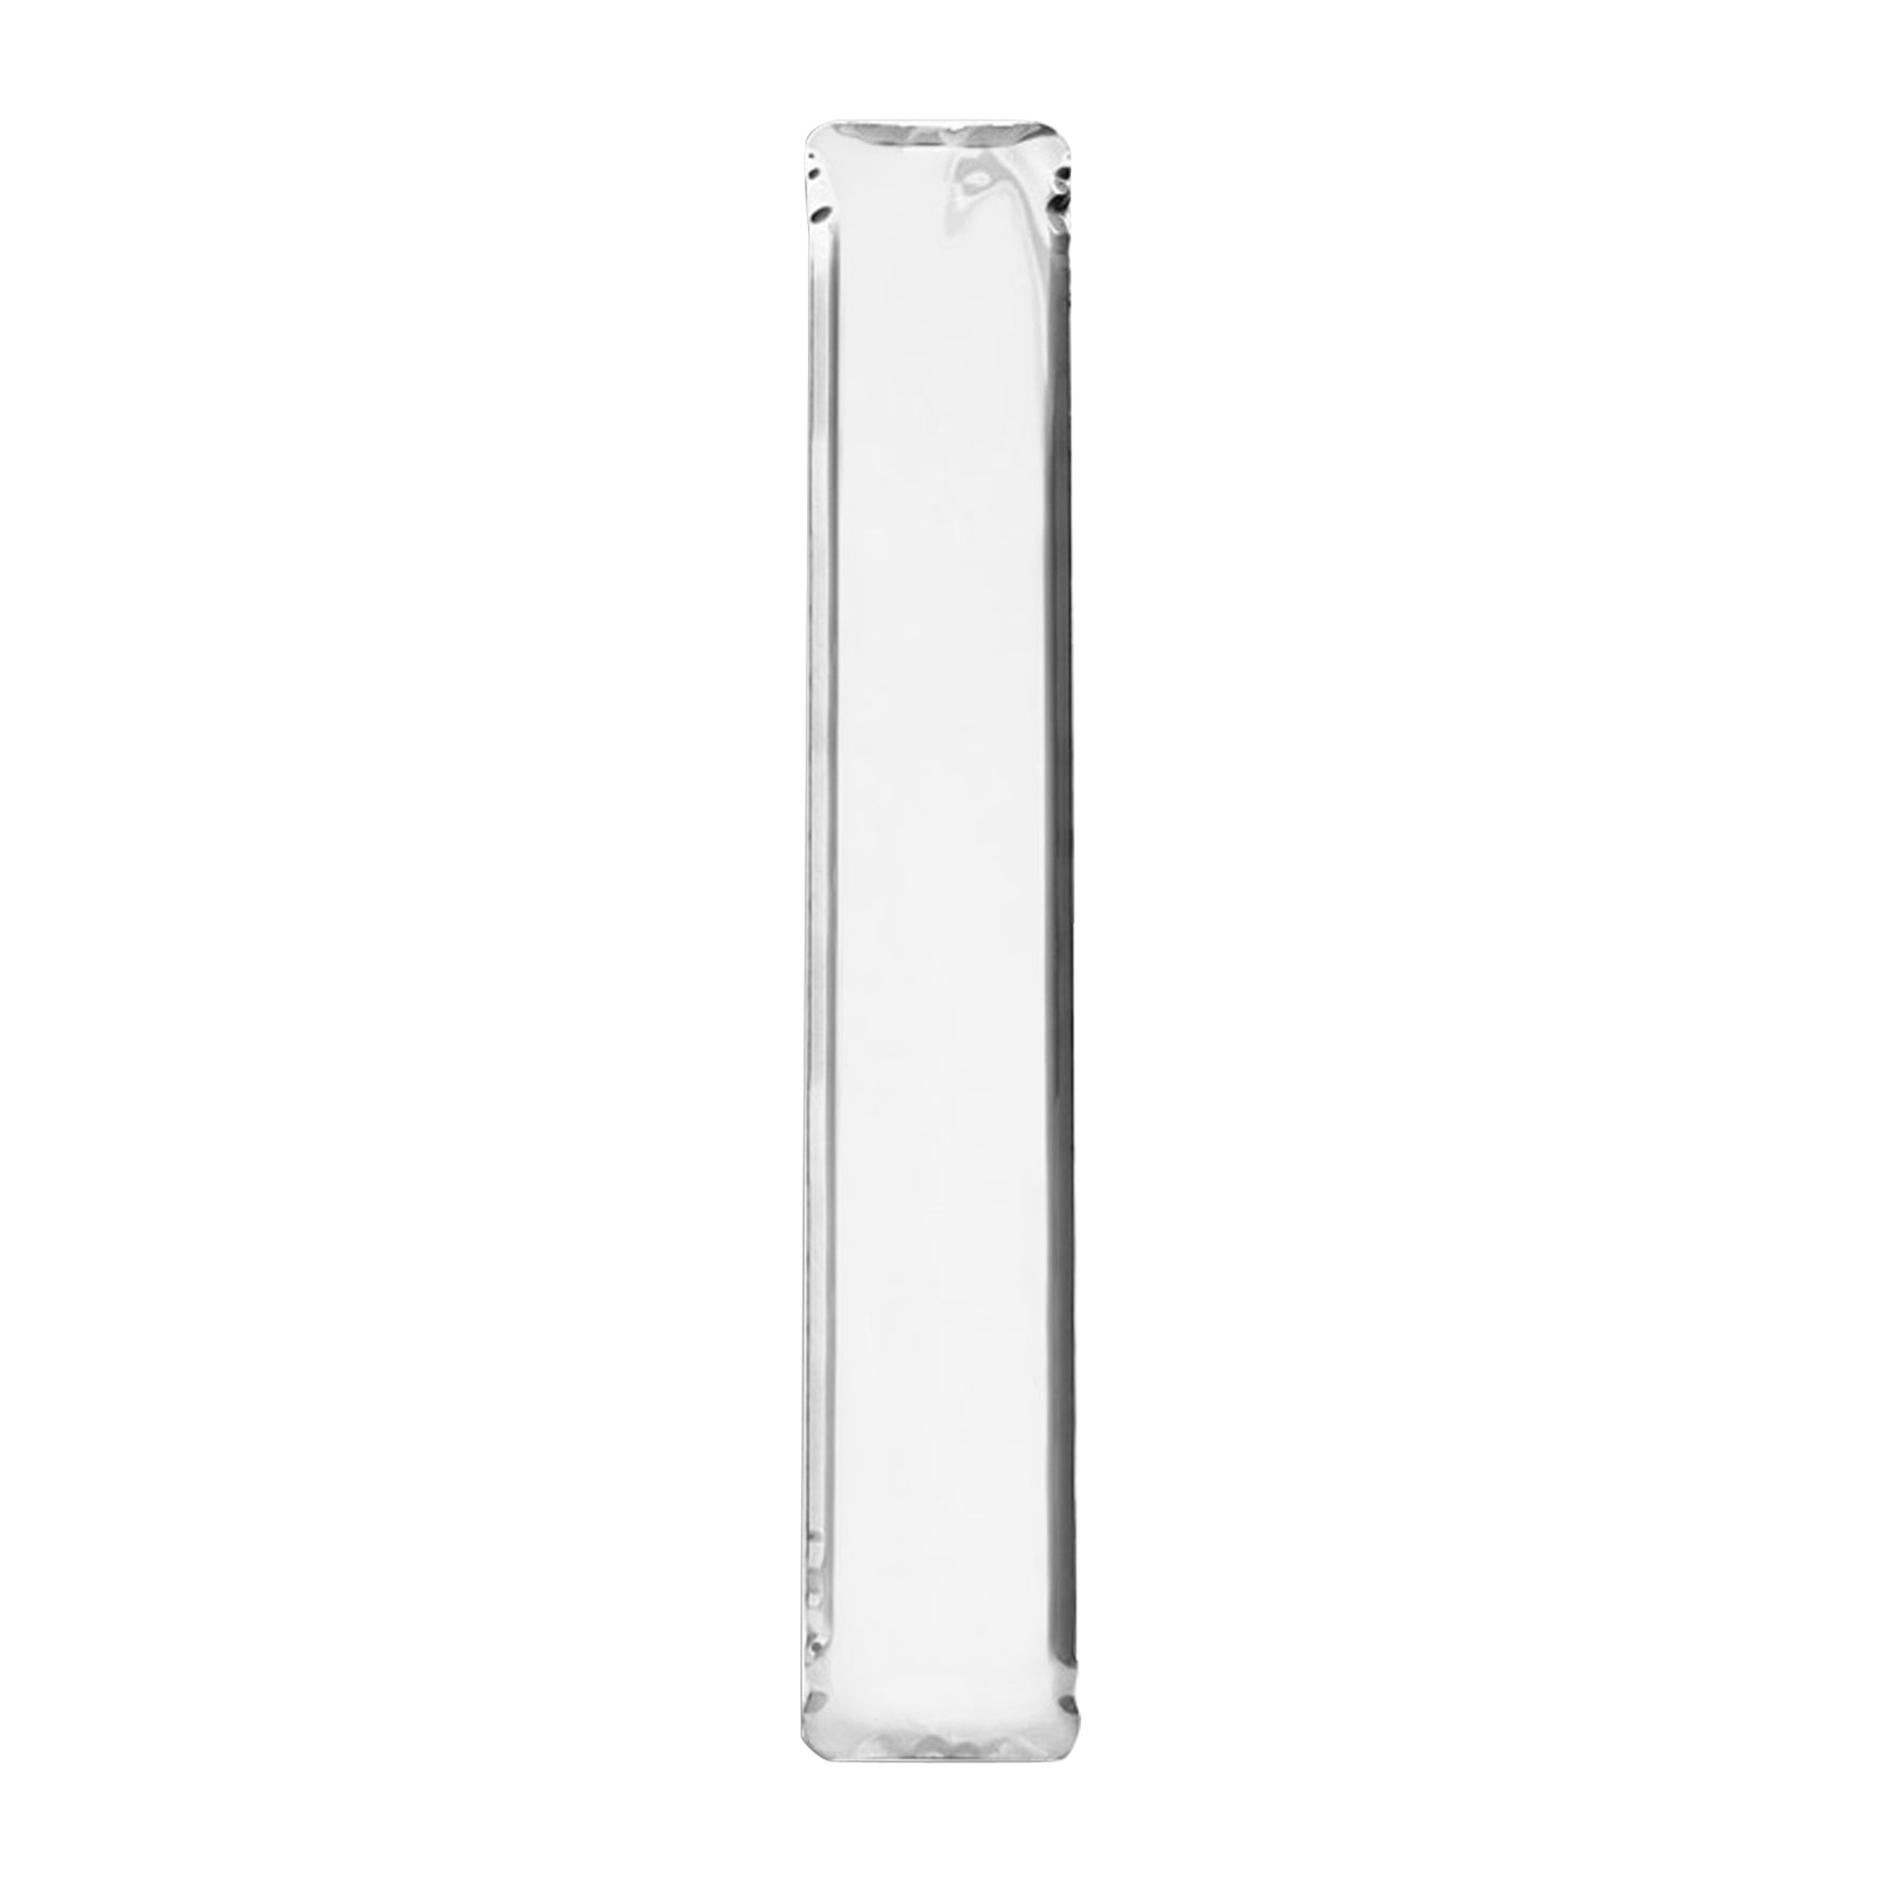 Tafla Mirror IQ Monumental Mirror by Zieta Prozessdesign in Stainless Steel For Sale